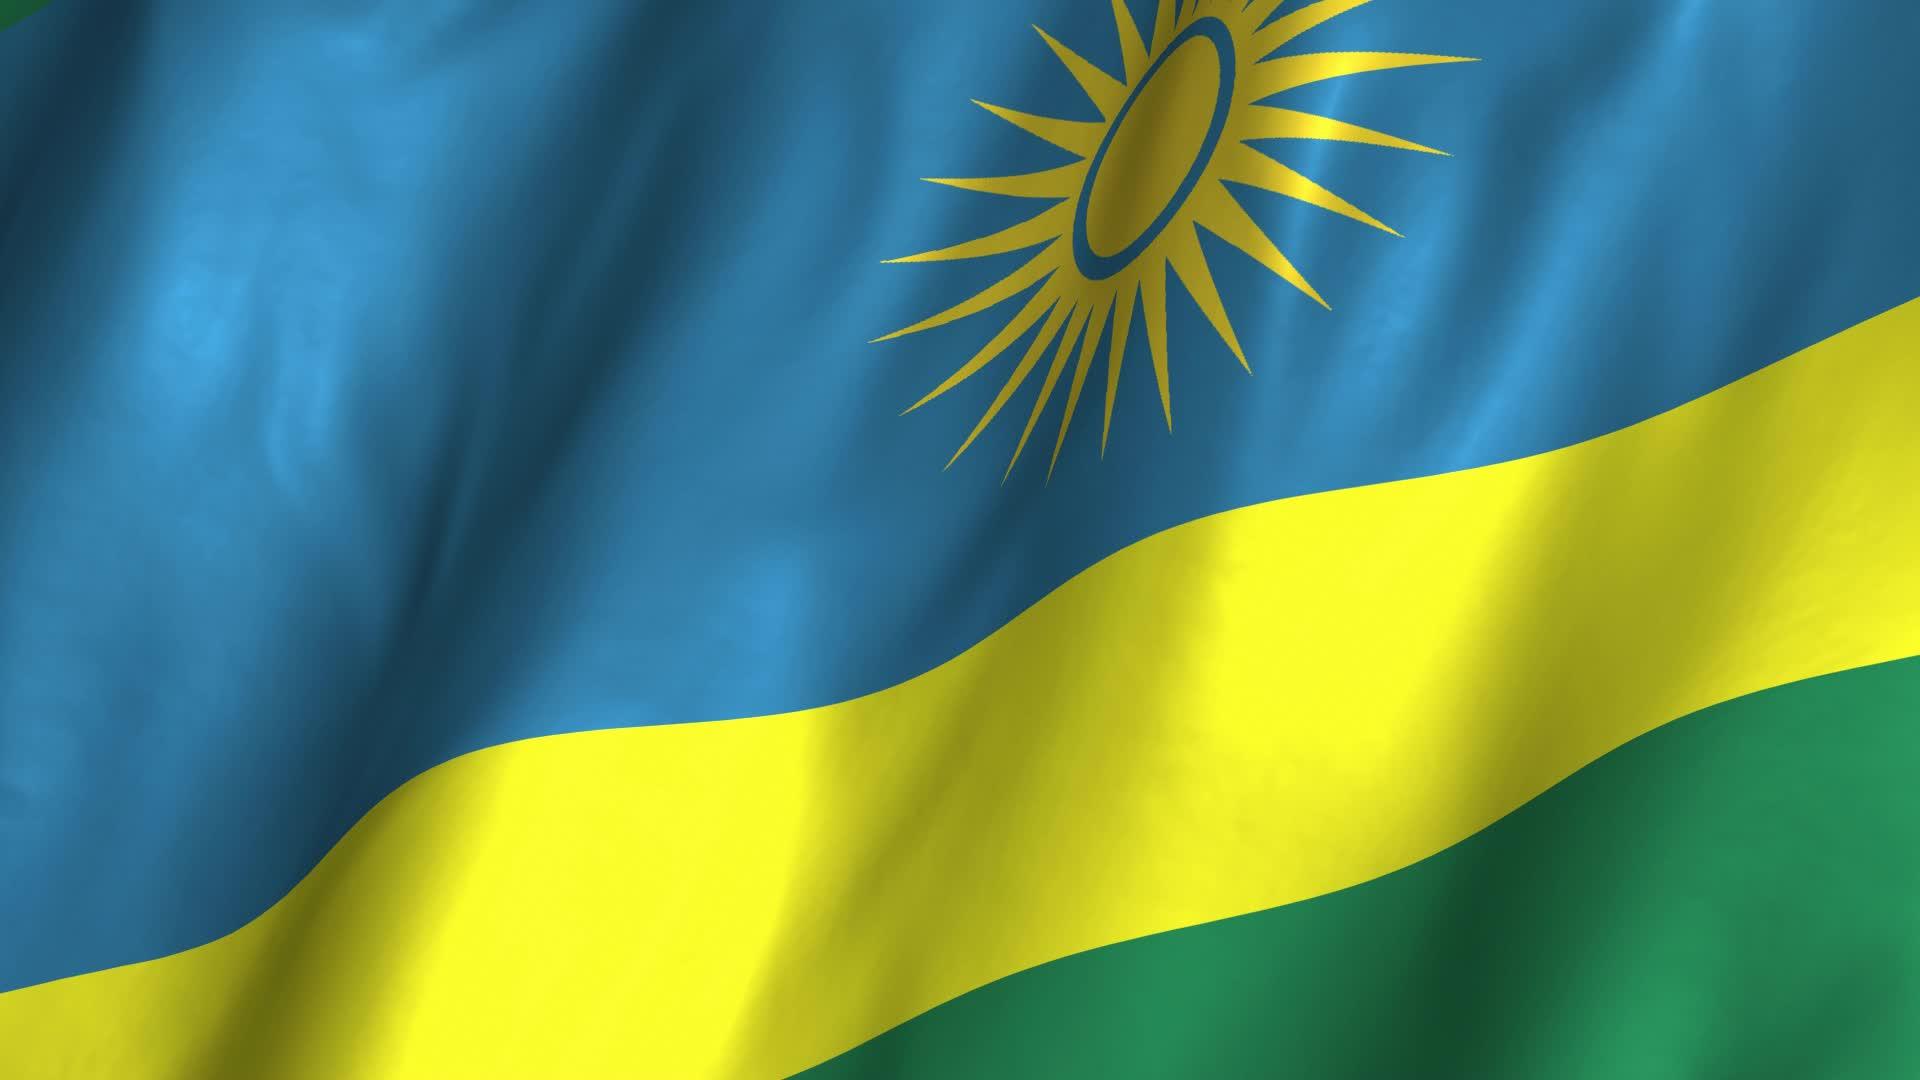 Best Rwandan Backgrounds on HipWallpapers